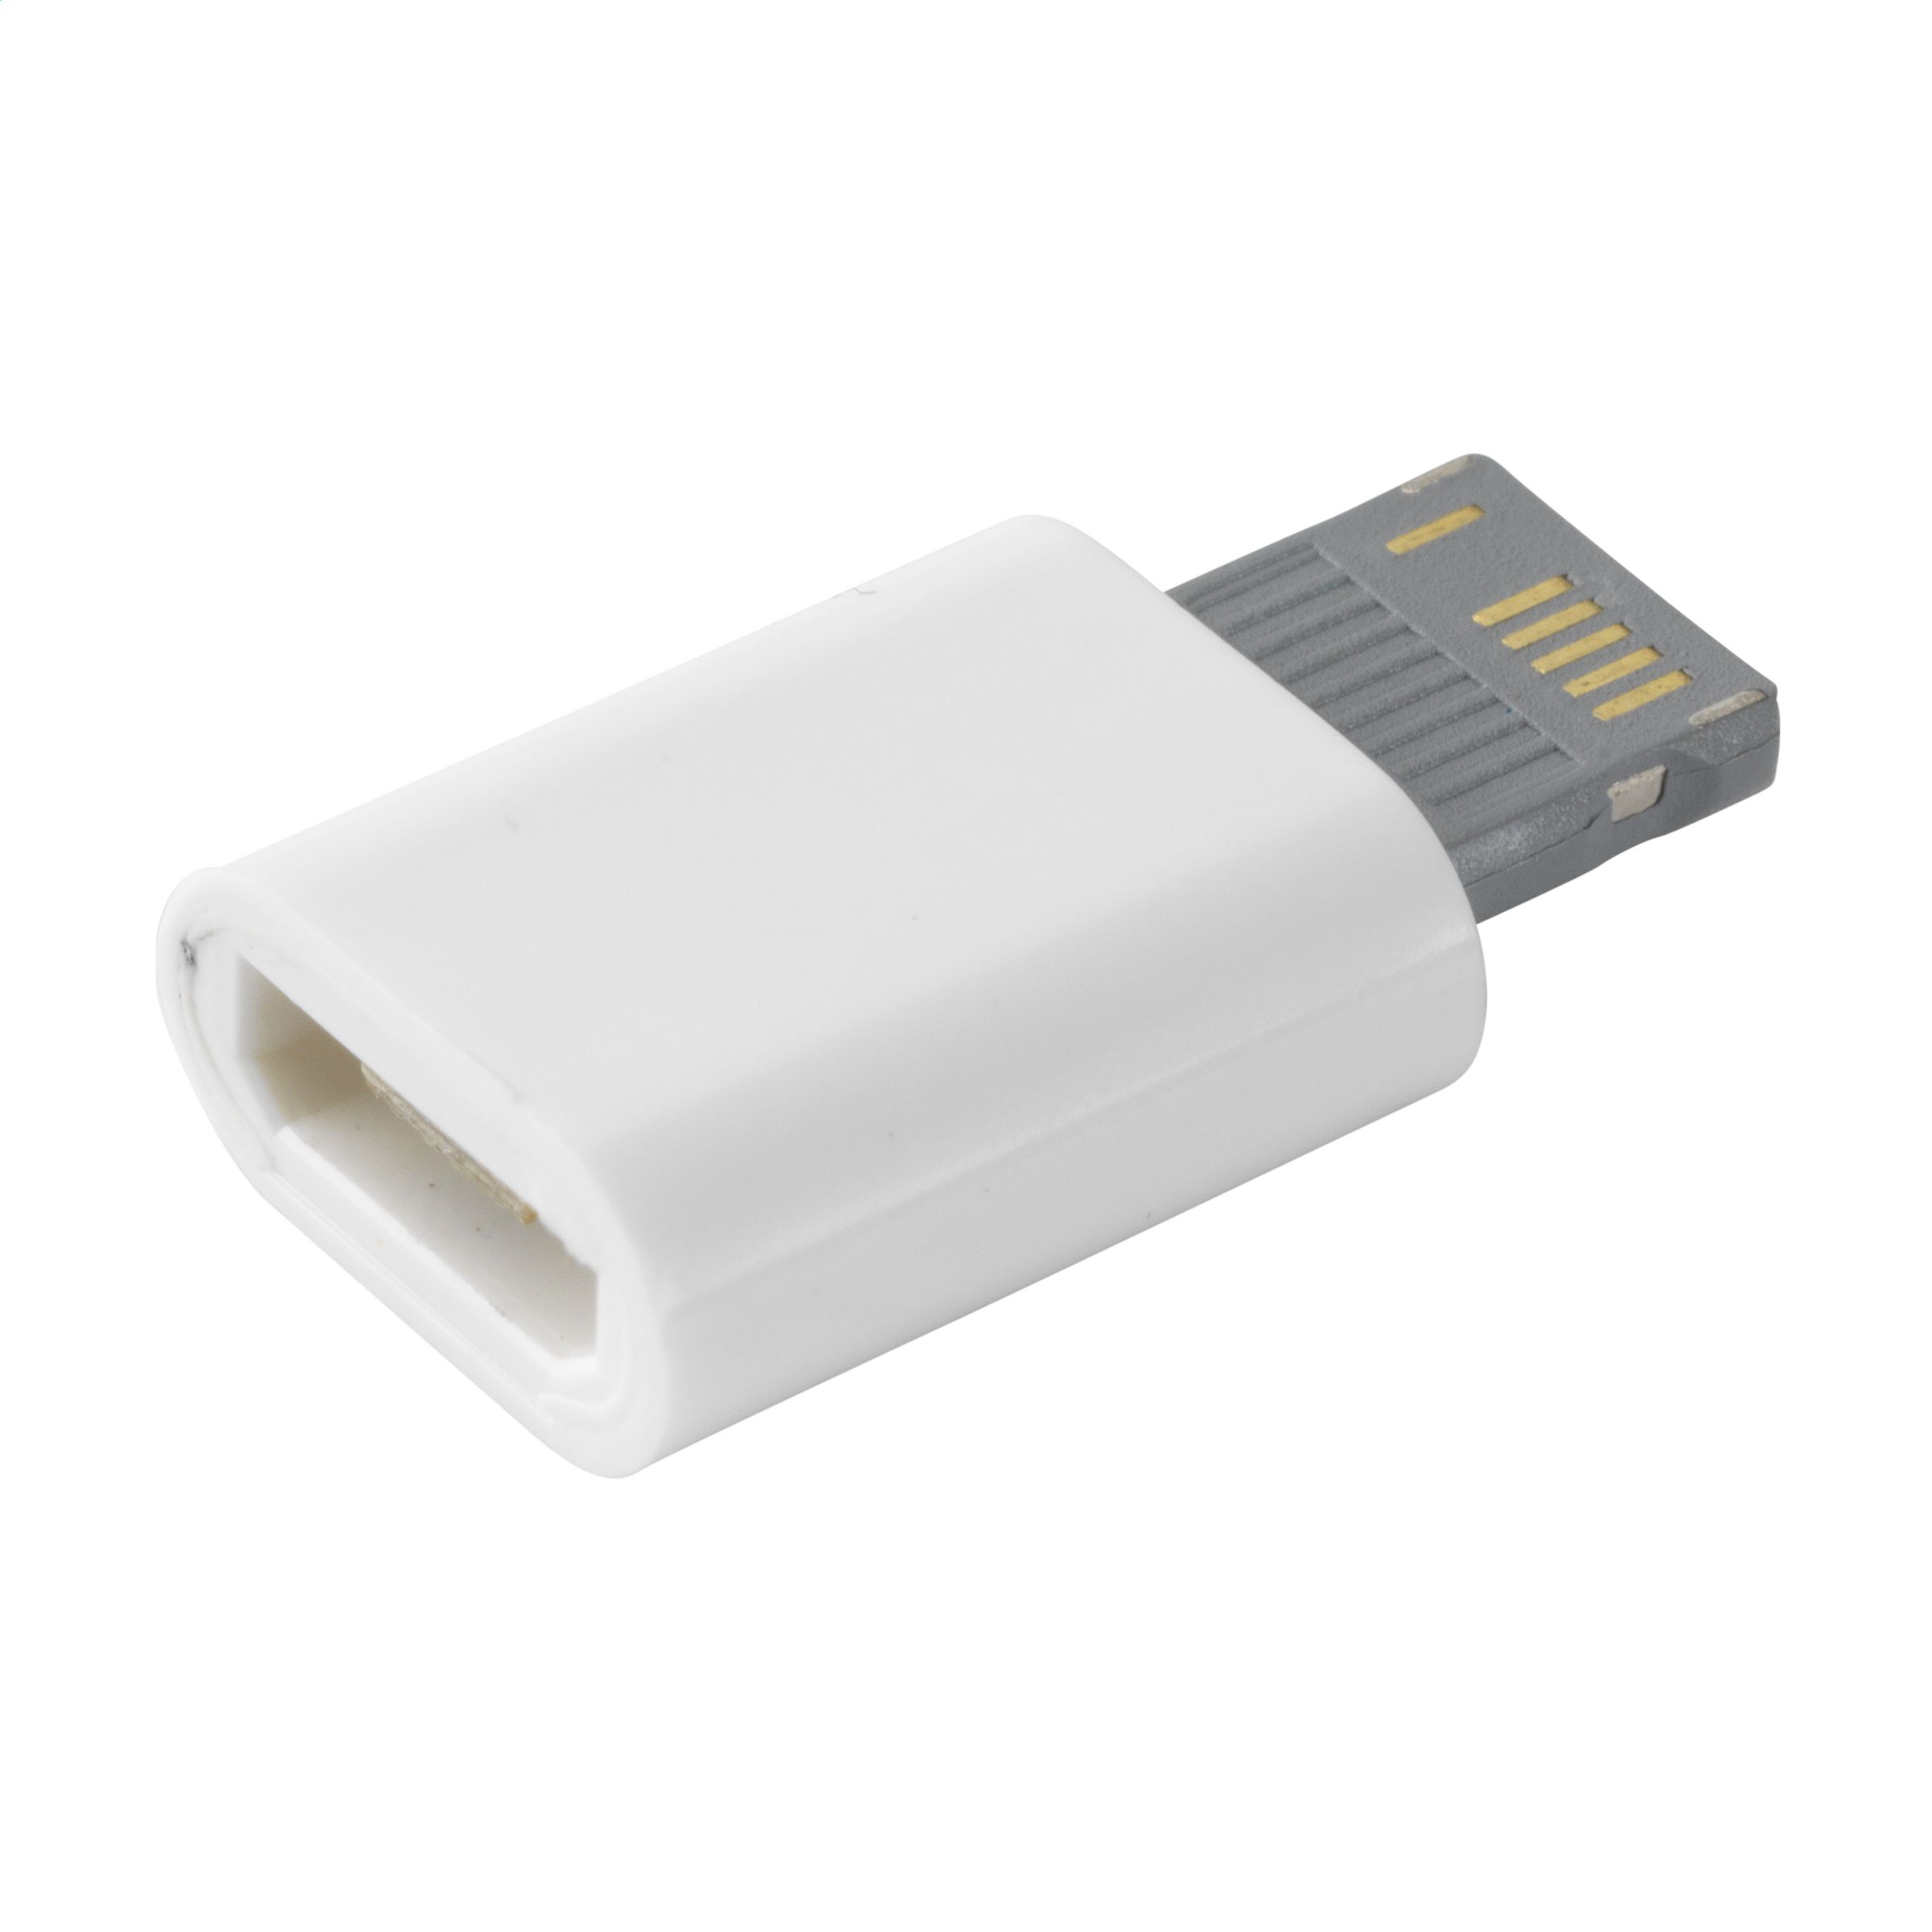 Micro-USB vers connecteur Lightning - Zaprinta France